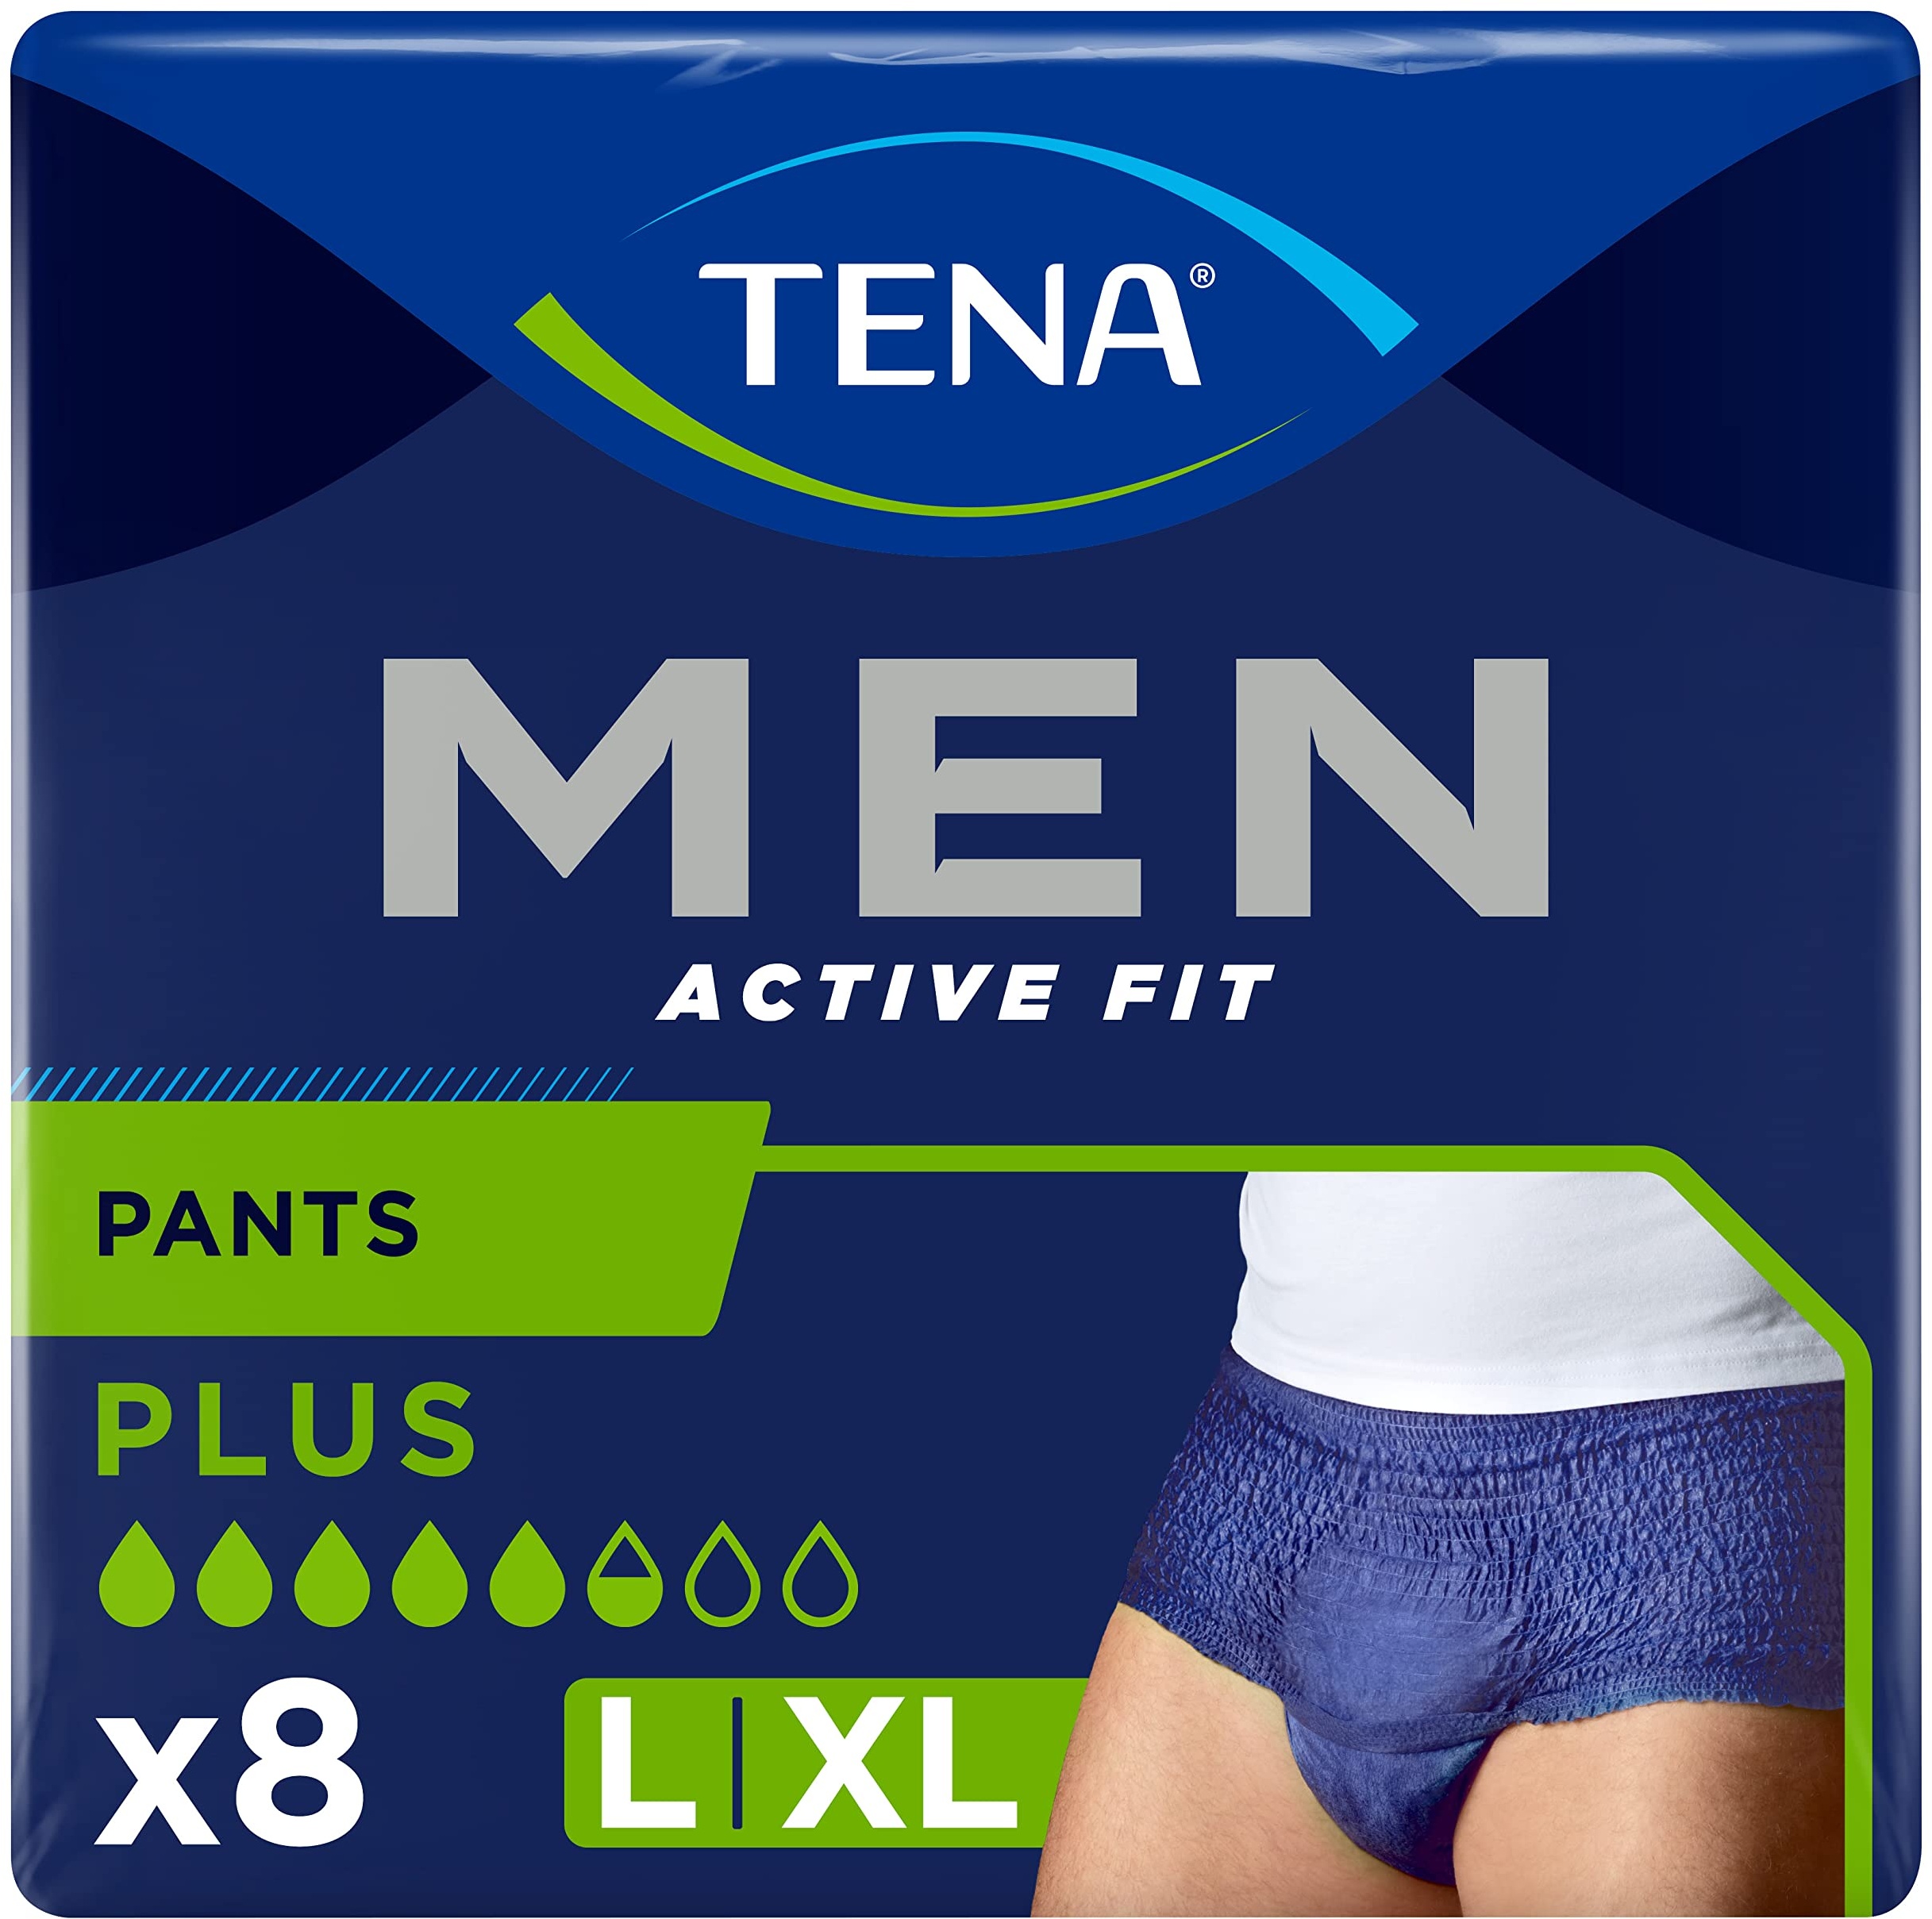 TENA Men Pants Plus Medium (M) - Inkontinenz-Slips für Herren (1 Karton = 4 x 12 = 48 Stück)